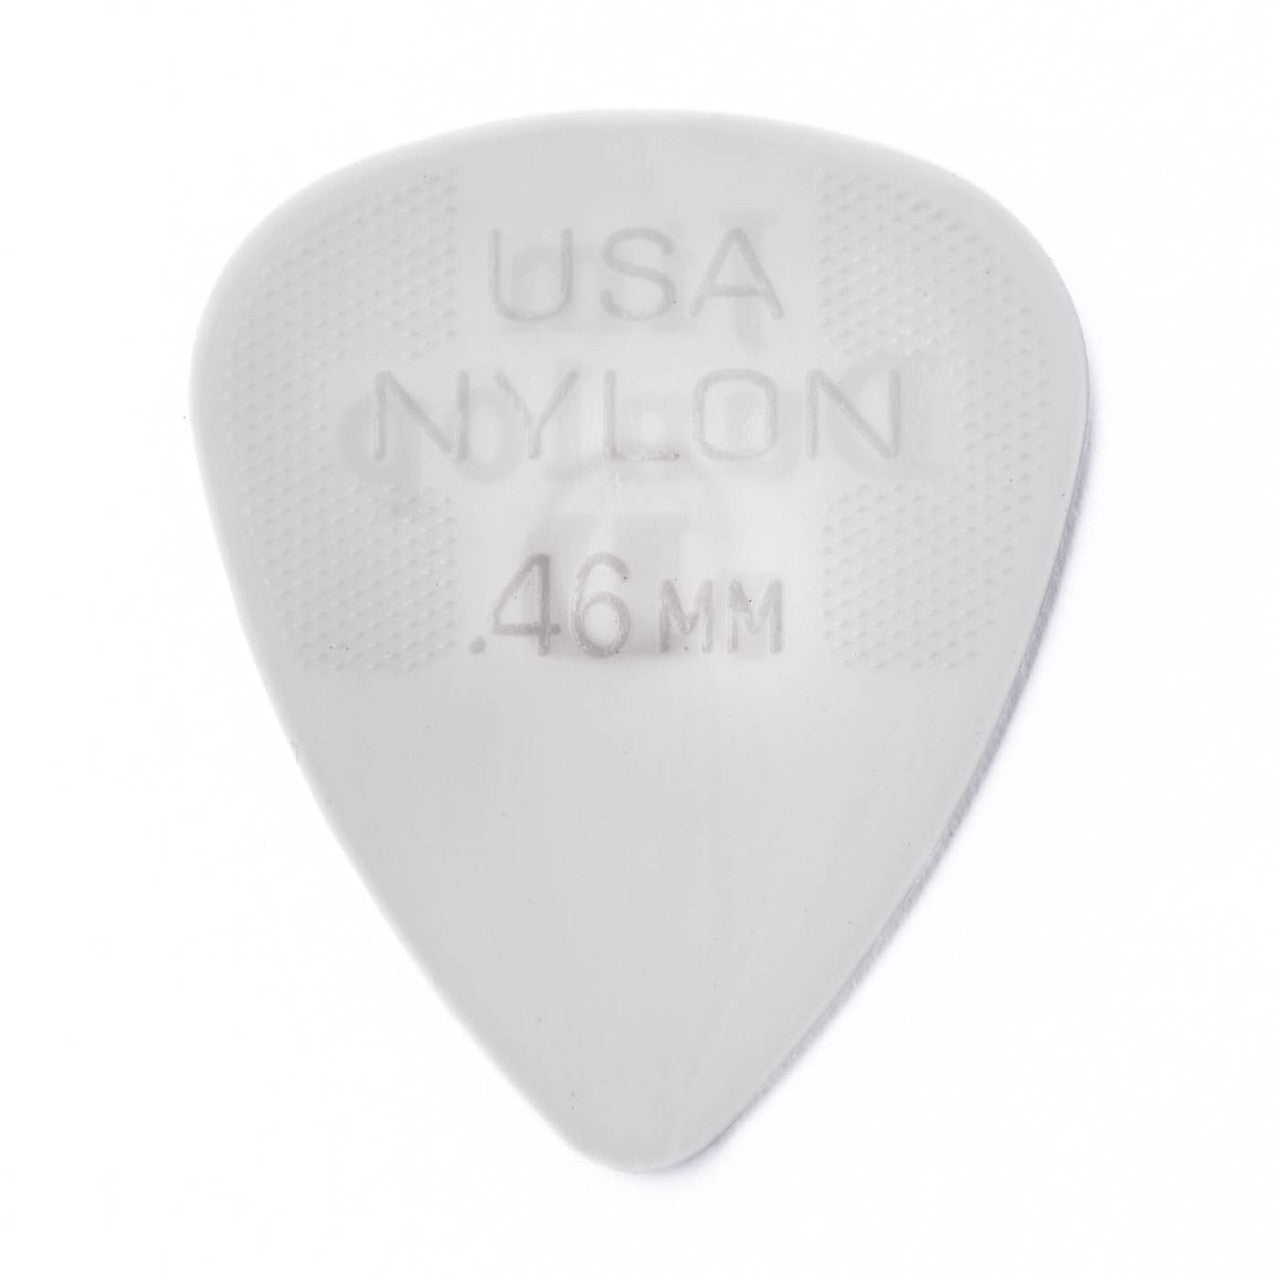 Dunlop Nylon Standard Guitar Picks - .46mm Cream